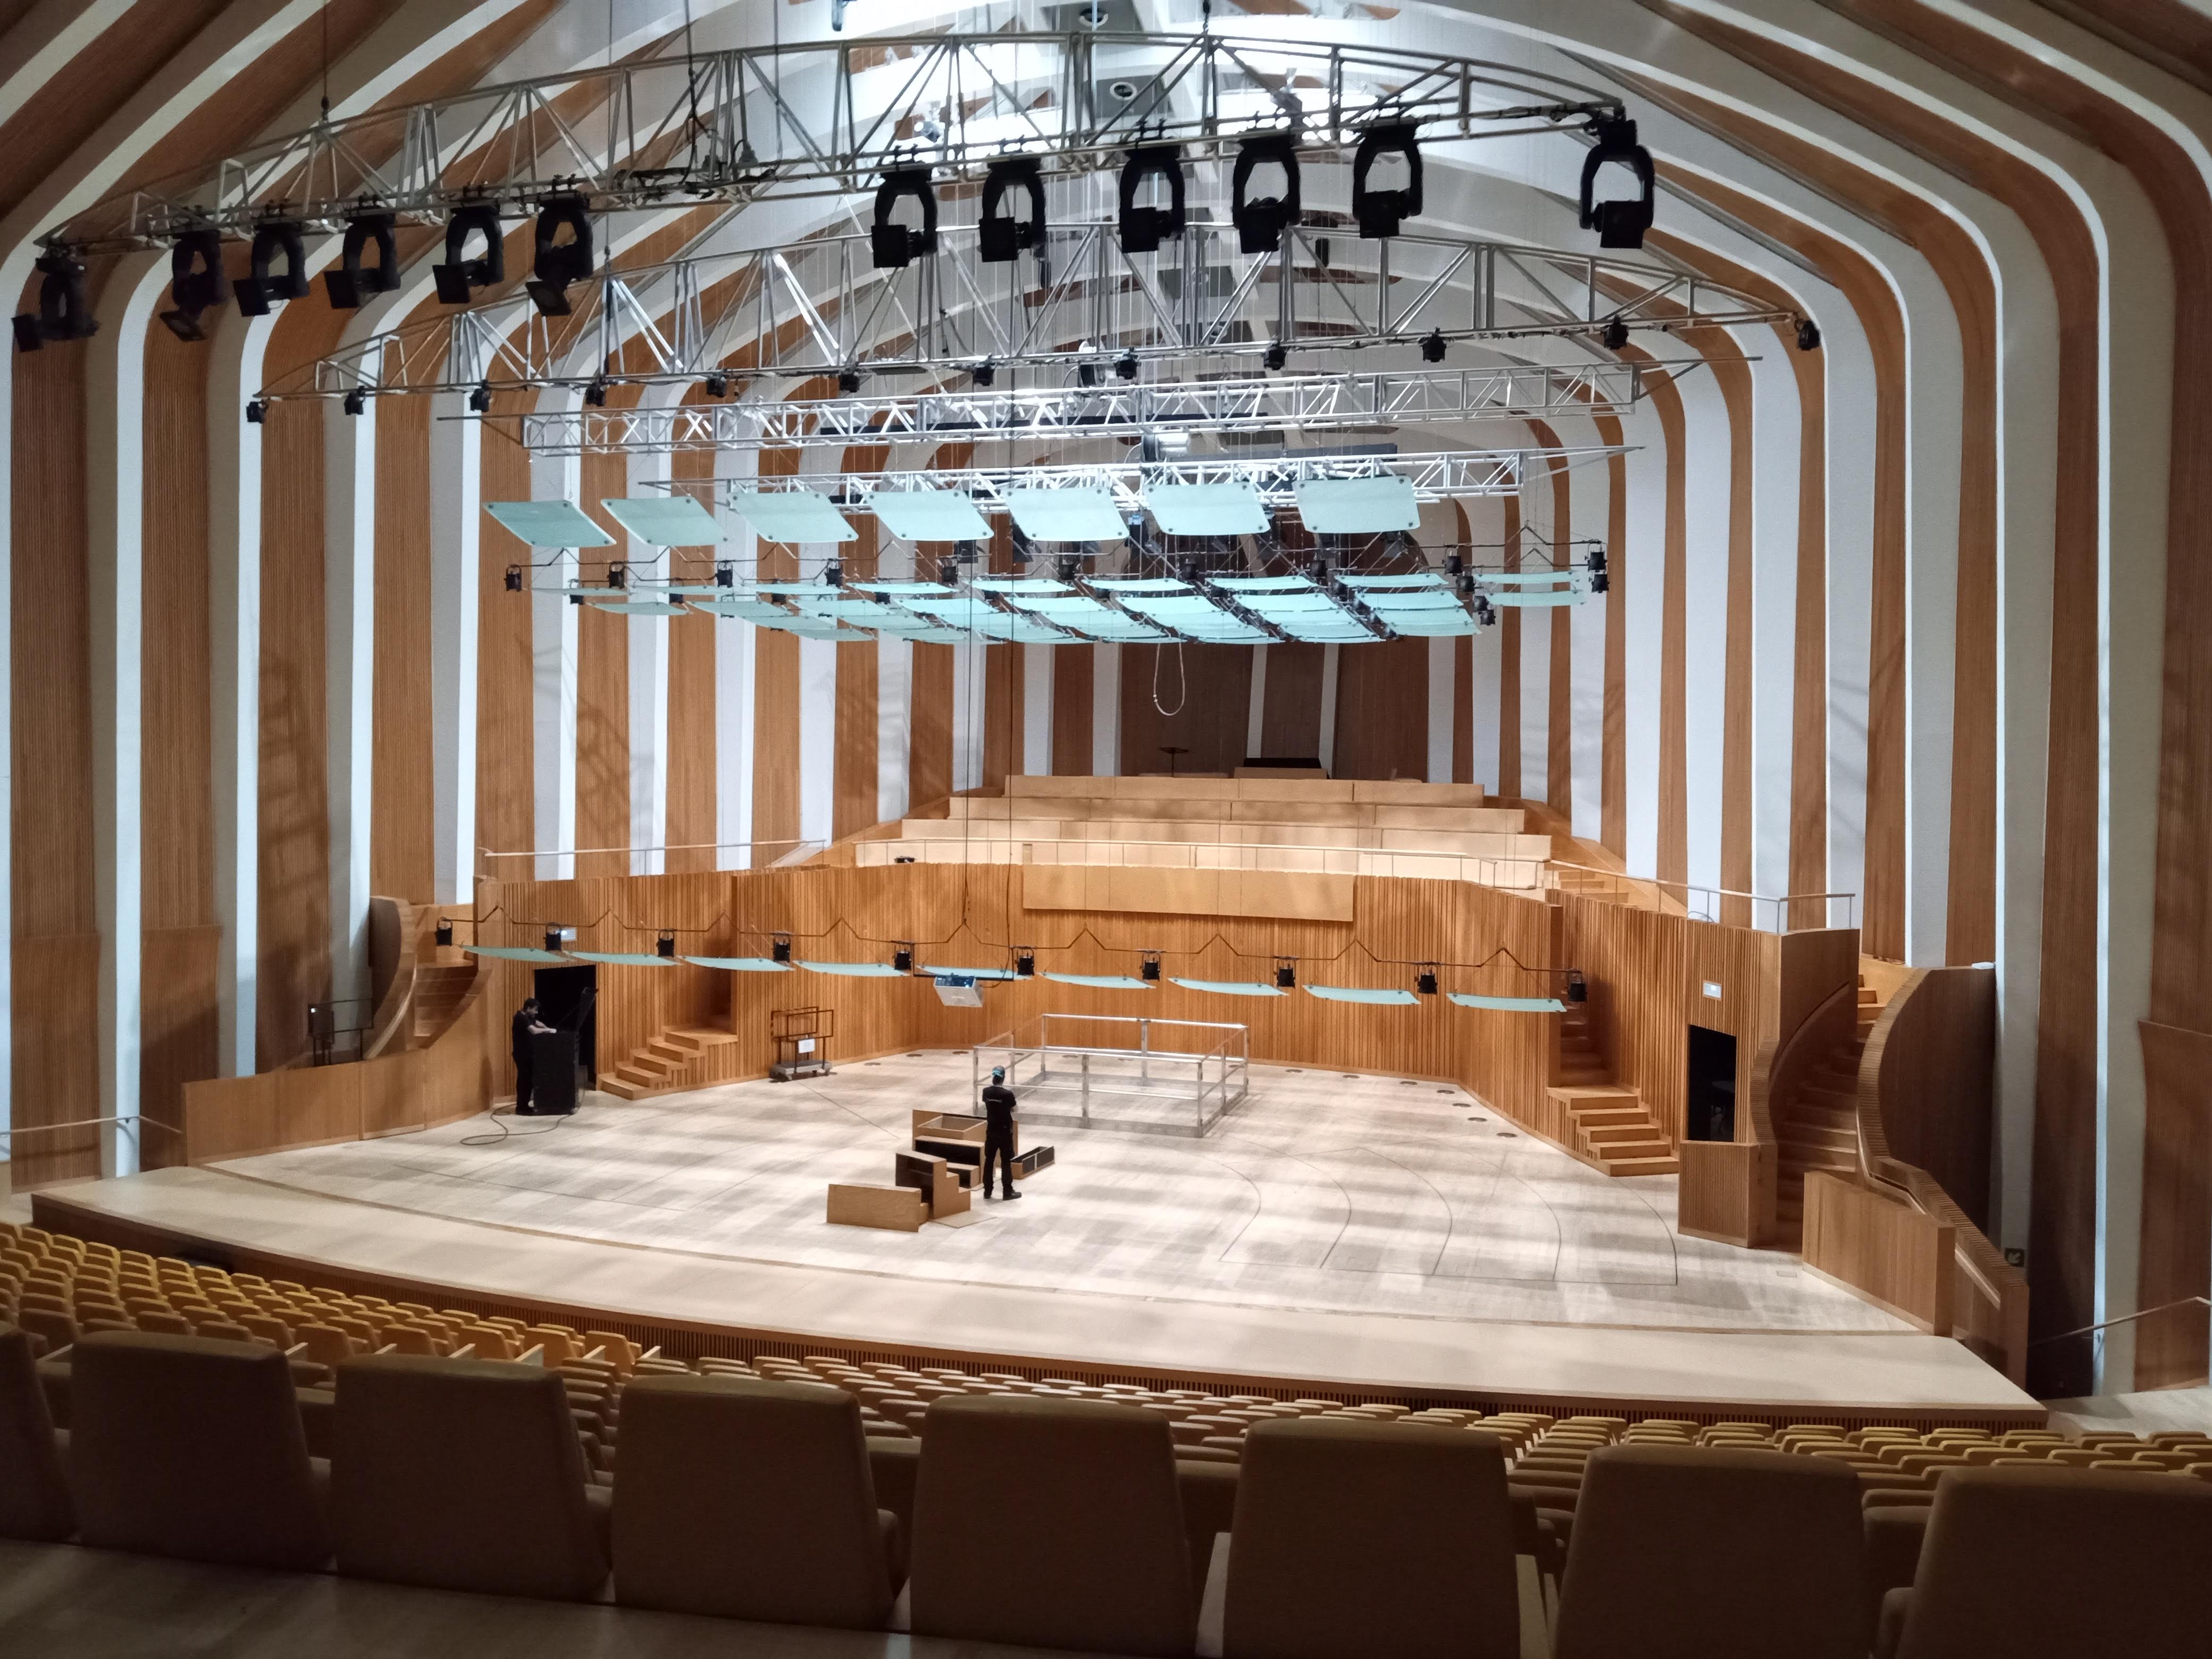 Jardin del Turia: Opera Small Hall